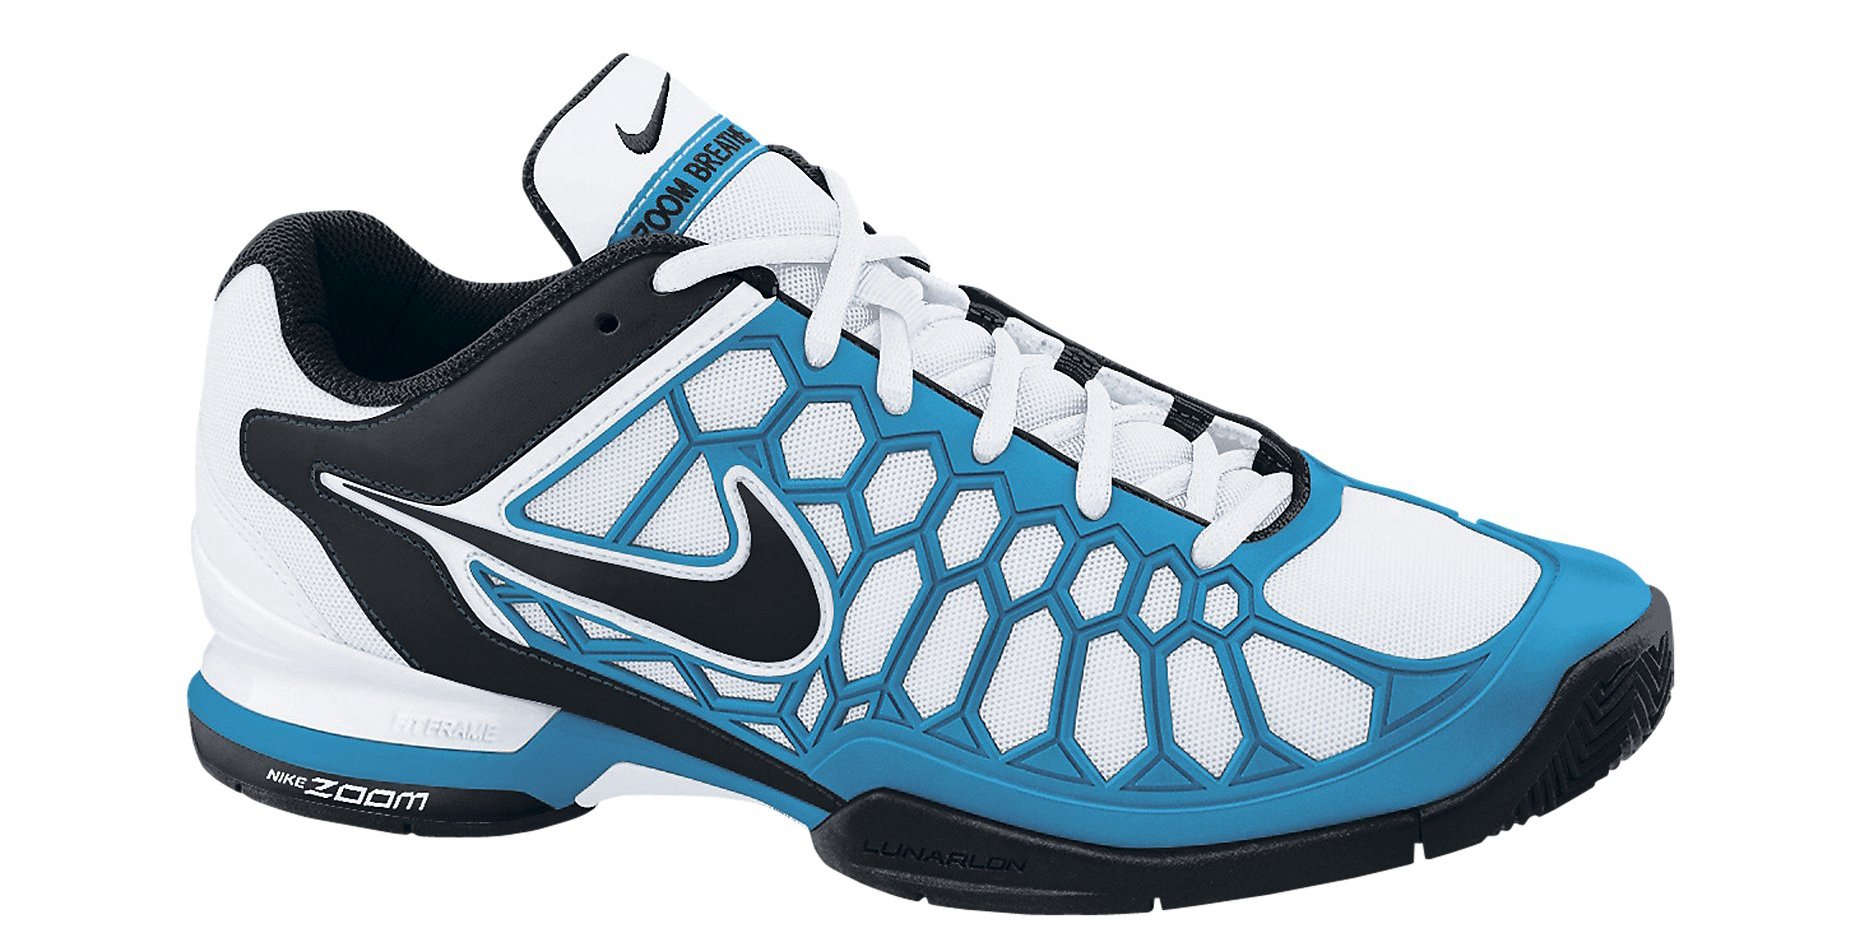 Pánská tenisová obuv Nike Zoom Breathe 2K11